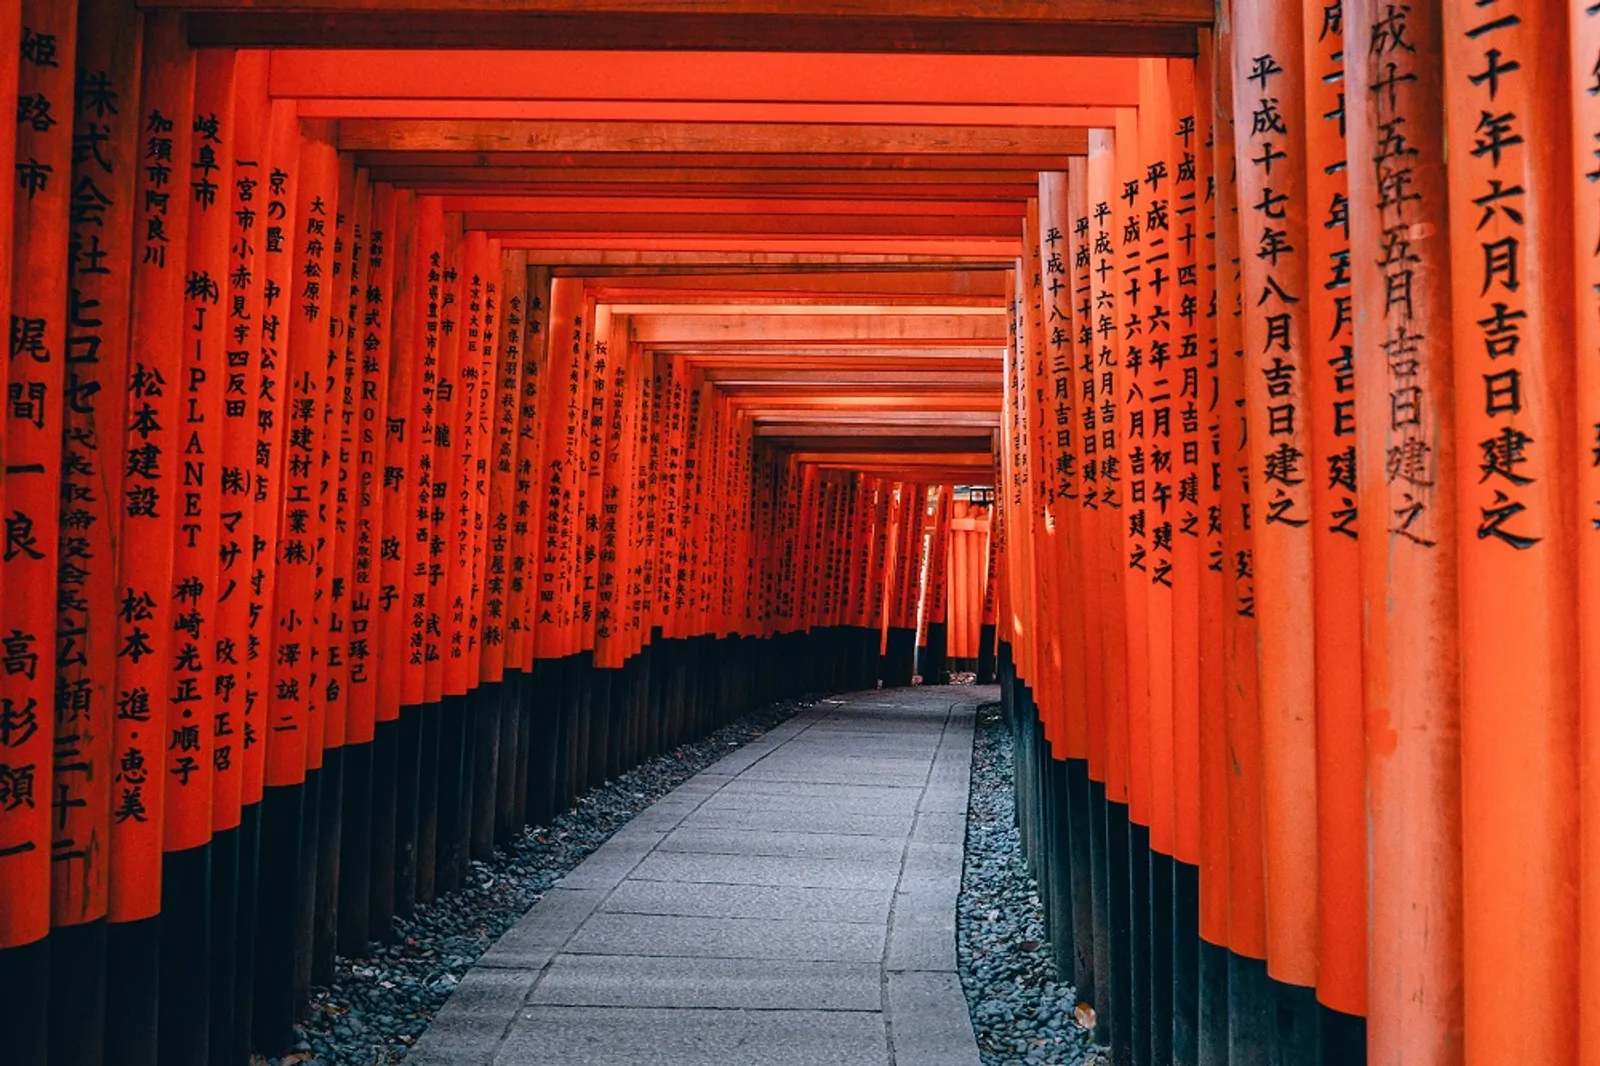 Hindari 7 Kebiasaan Buruk di Negeri Sendiri Kalau Jadi Turis di Jepang